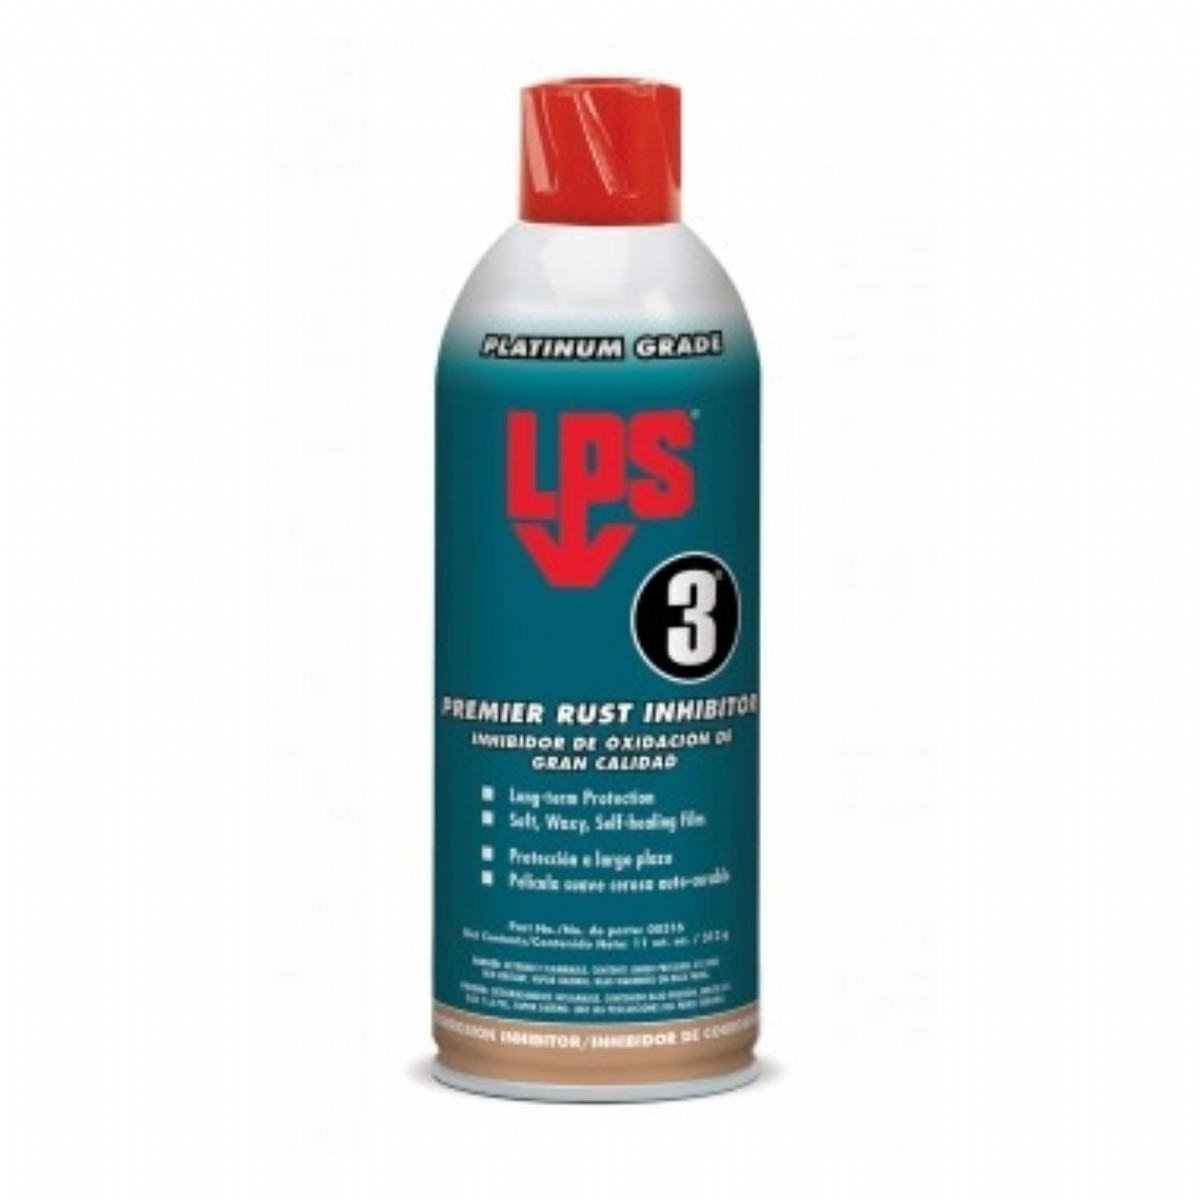 LPS GROUPS | LPS3 PREMIER RUST INHIBITOR | 4003 | airplane, aircraft, ams, ardrox, chemetal, imcaero, surf chemistry, spray, solvent, cleaner, lps3, premium rust inhibitor  | 